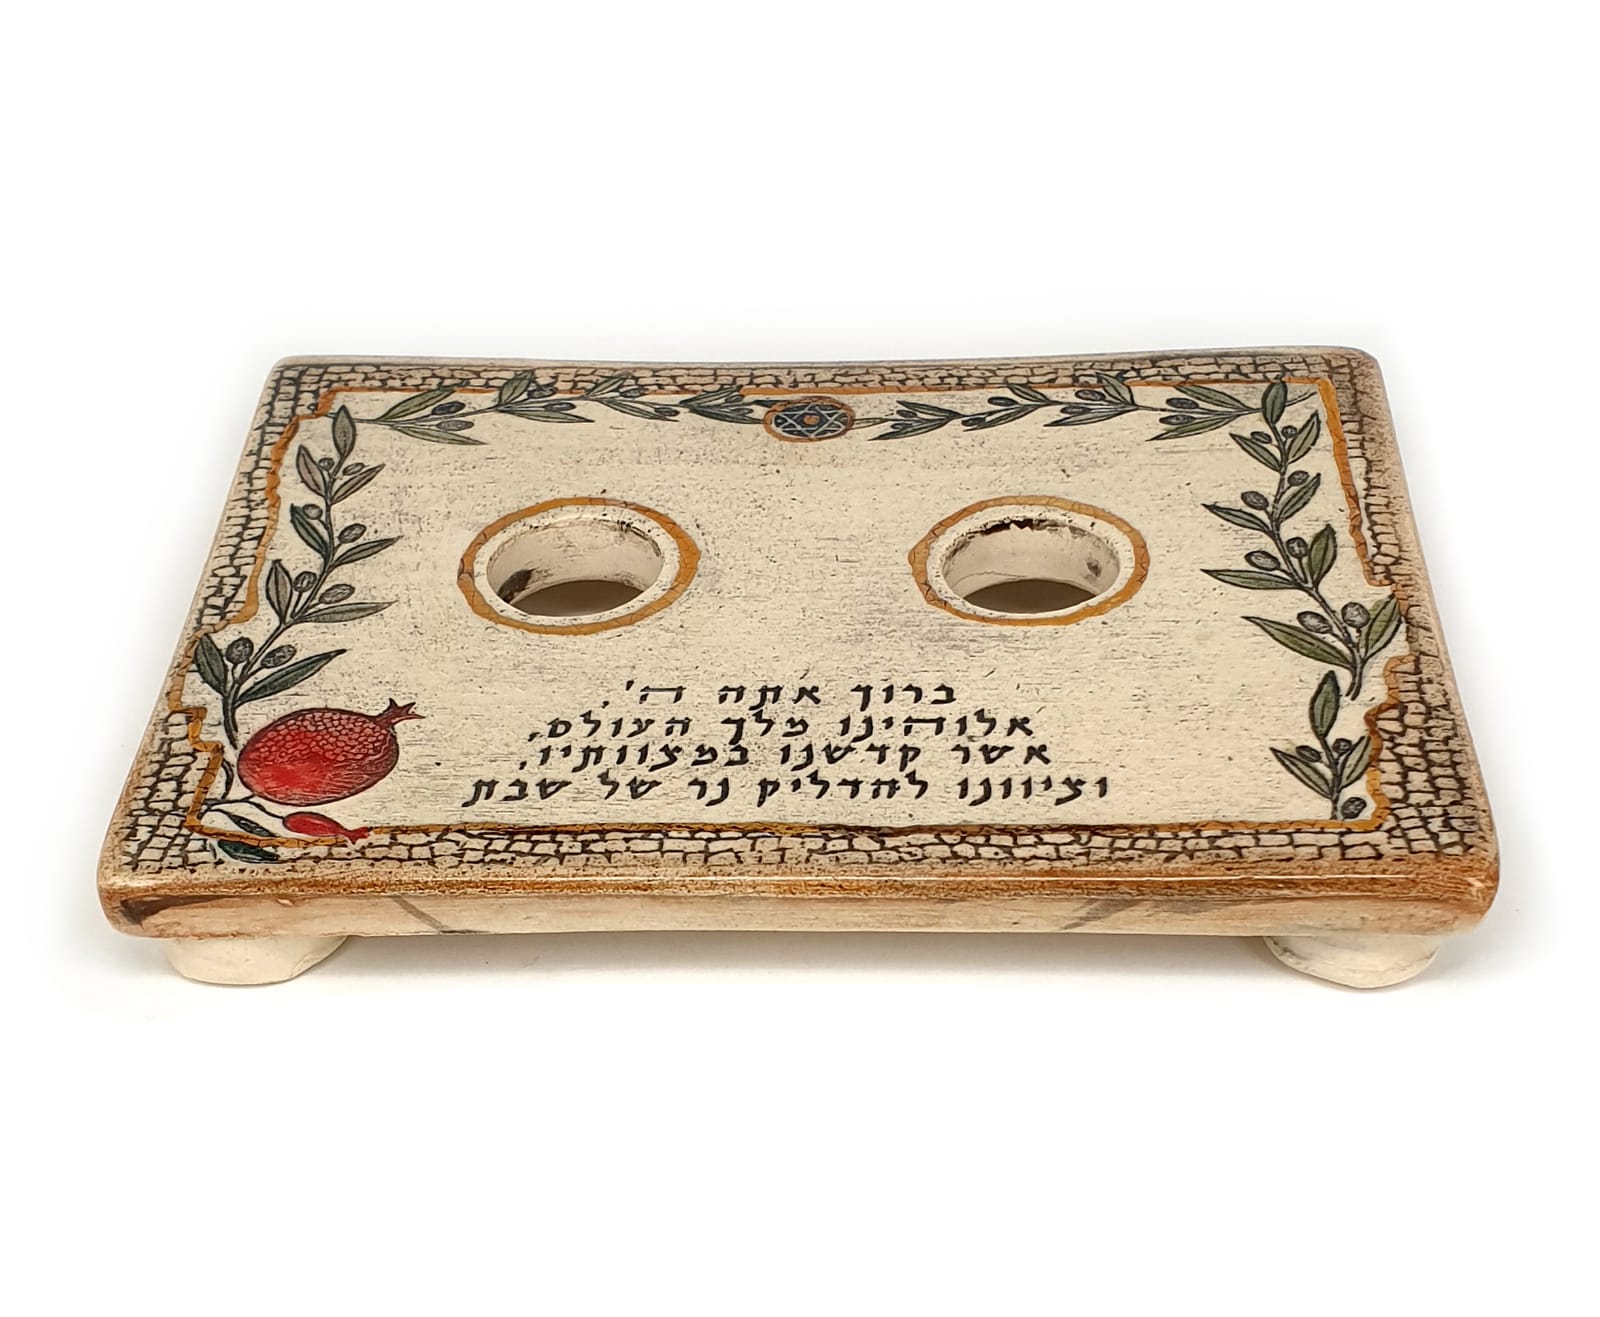 Ceramic Shabbat candleholders - Decorated with 24k gold